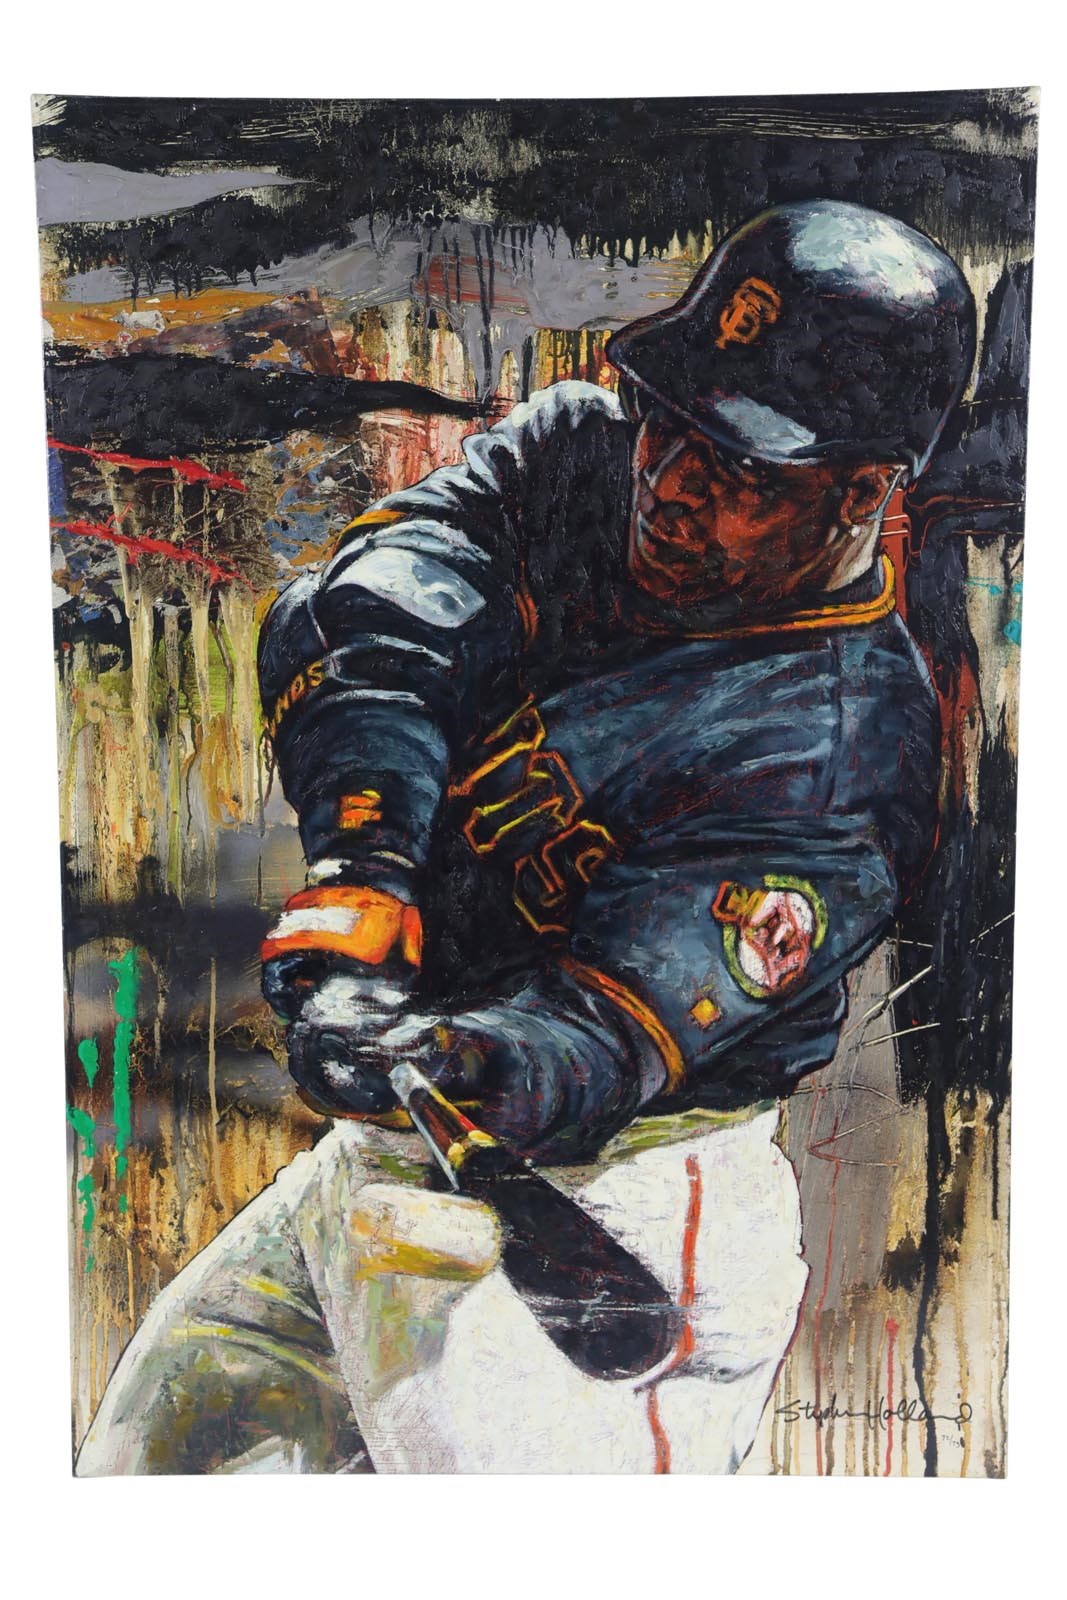 Barry Bonds 73rd Home Run Giclee Artwork by Stephen Holland